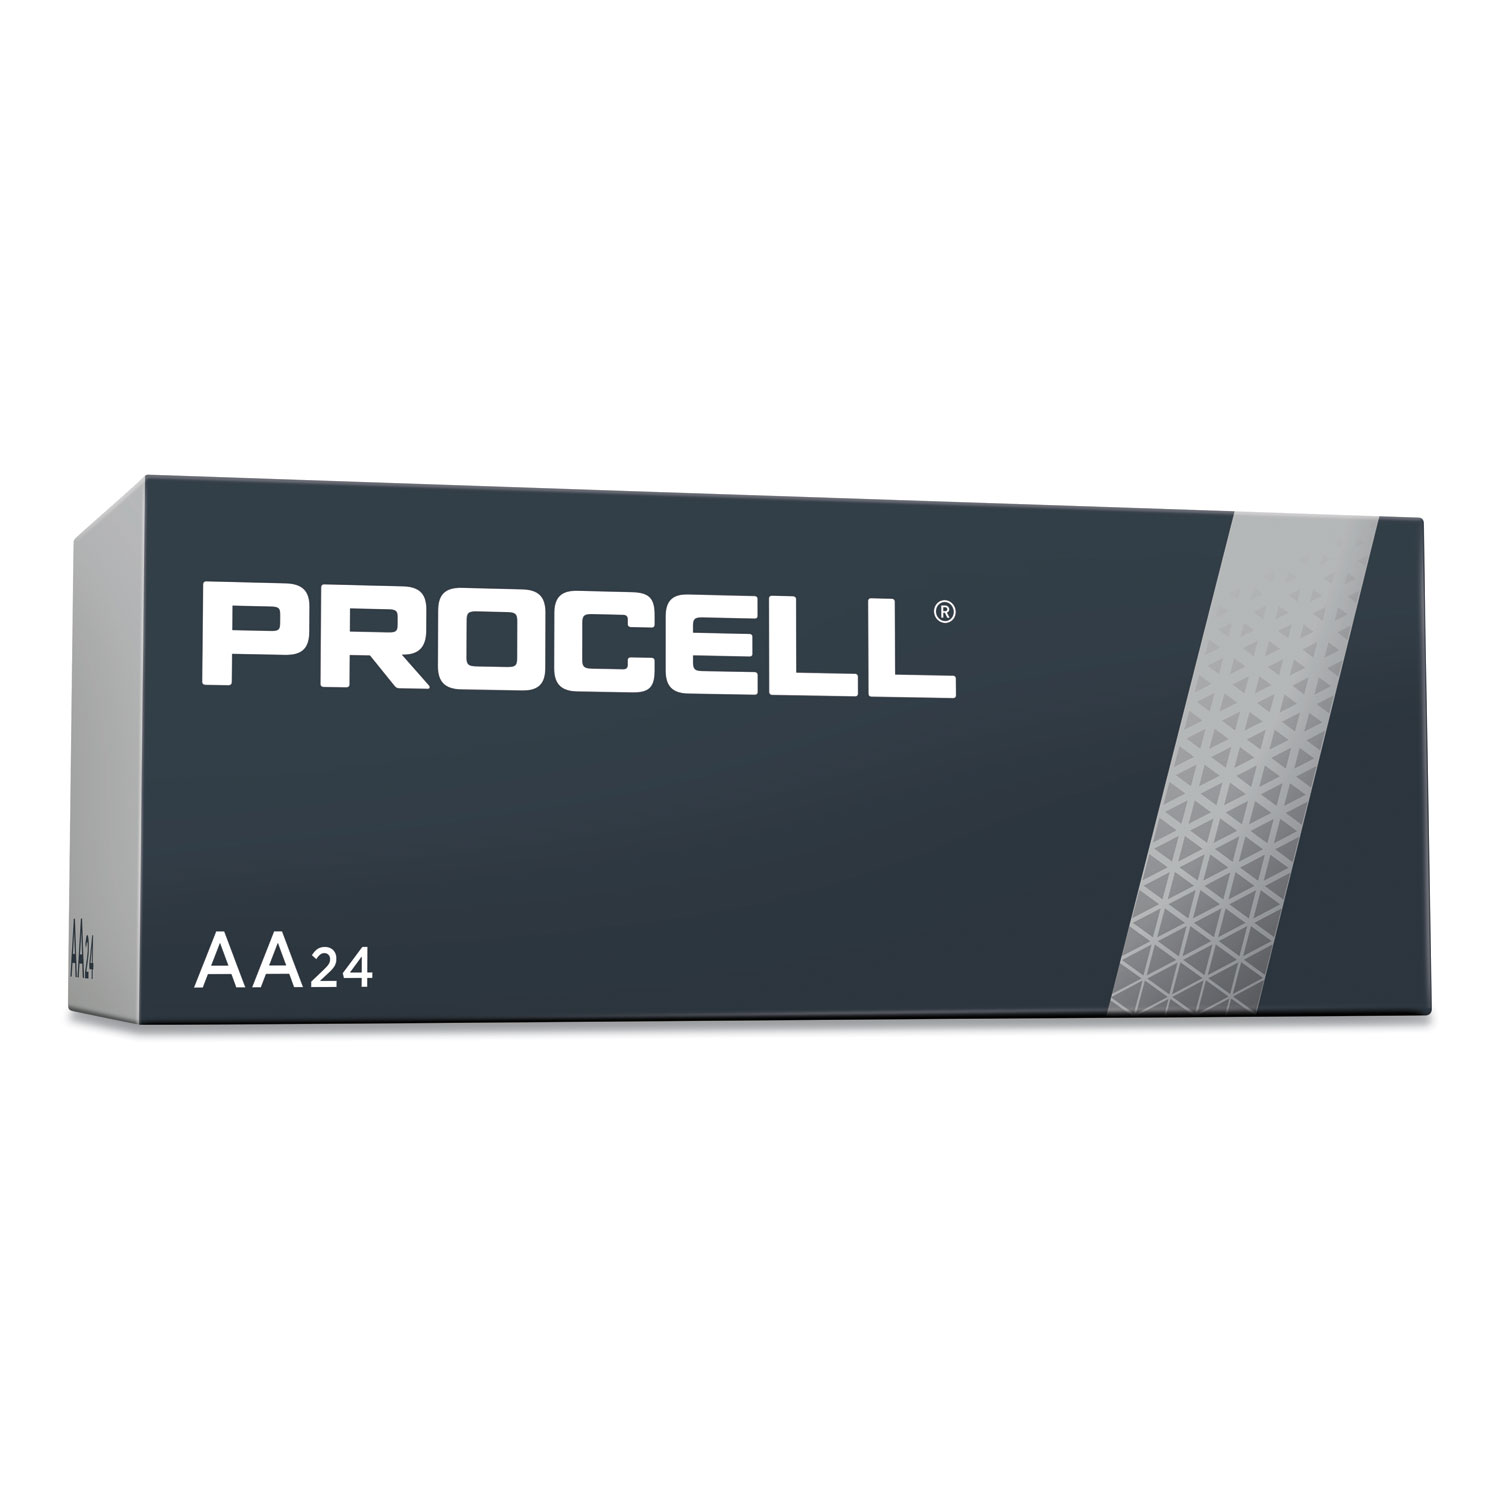  Duracell PC1500CT Procell Alkaline AA Batteries, 144/Carton (DURPC1500CT) 